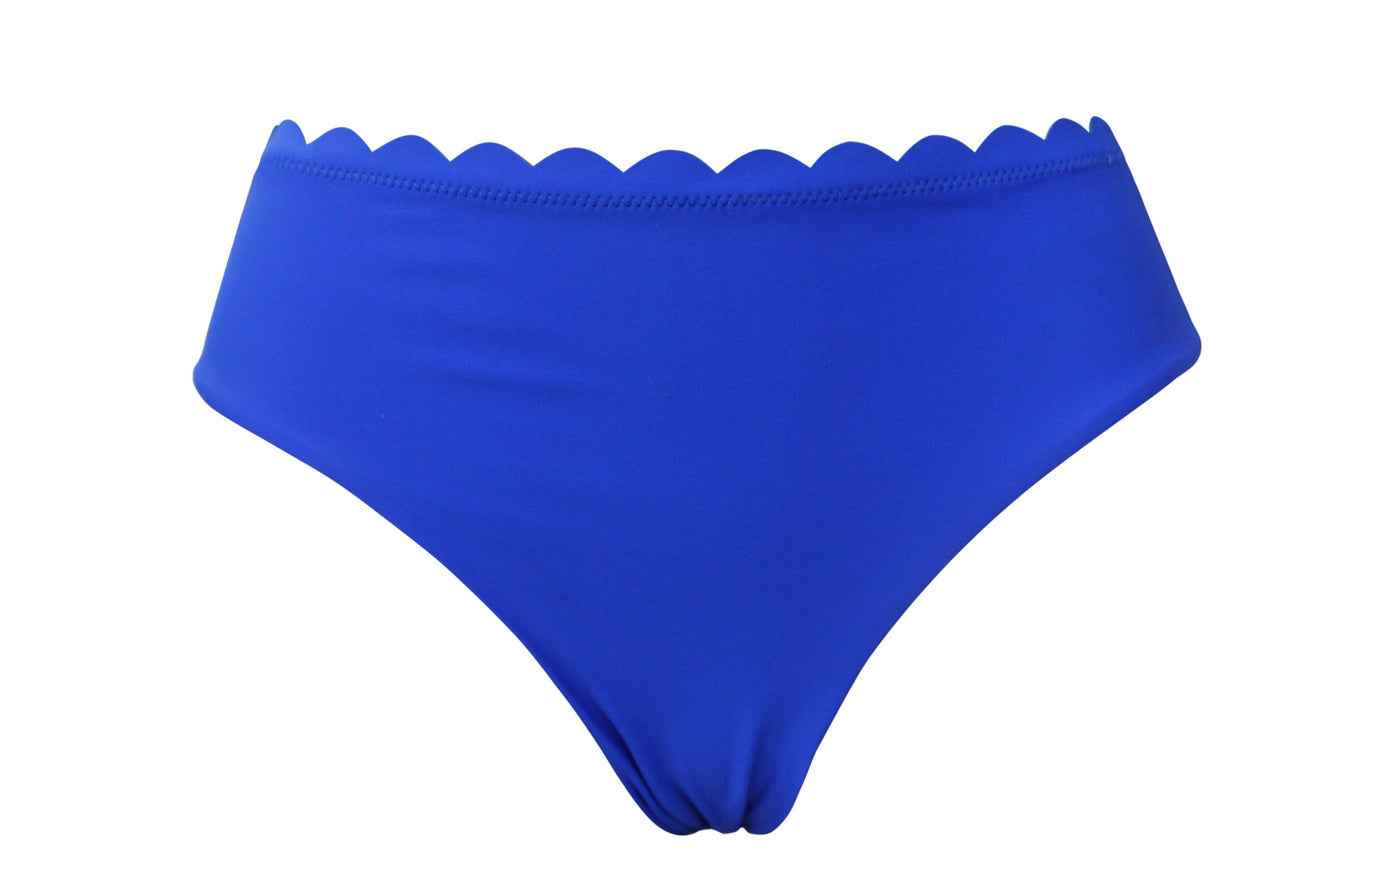 Kaanda beach life venus mid rise bikini bottom blue